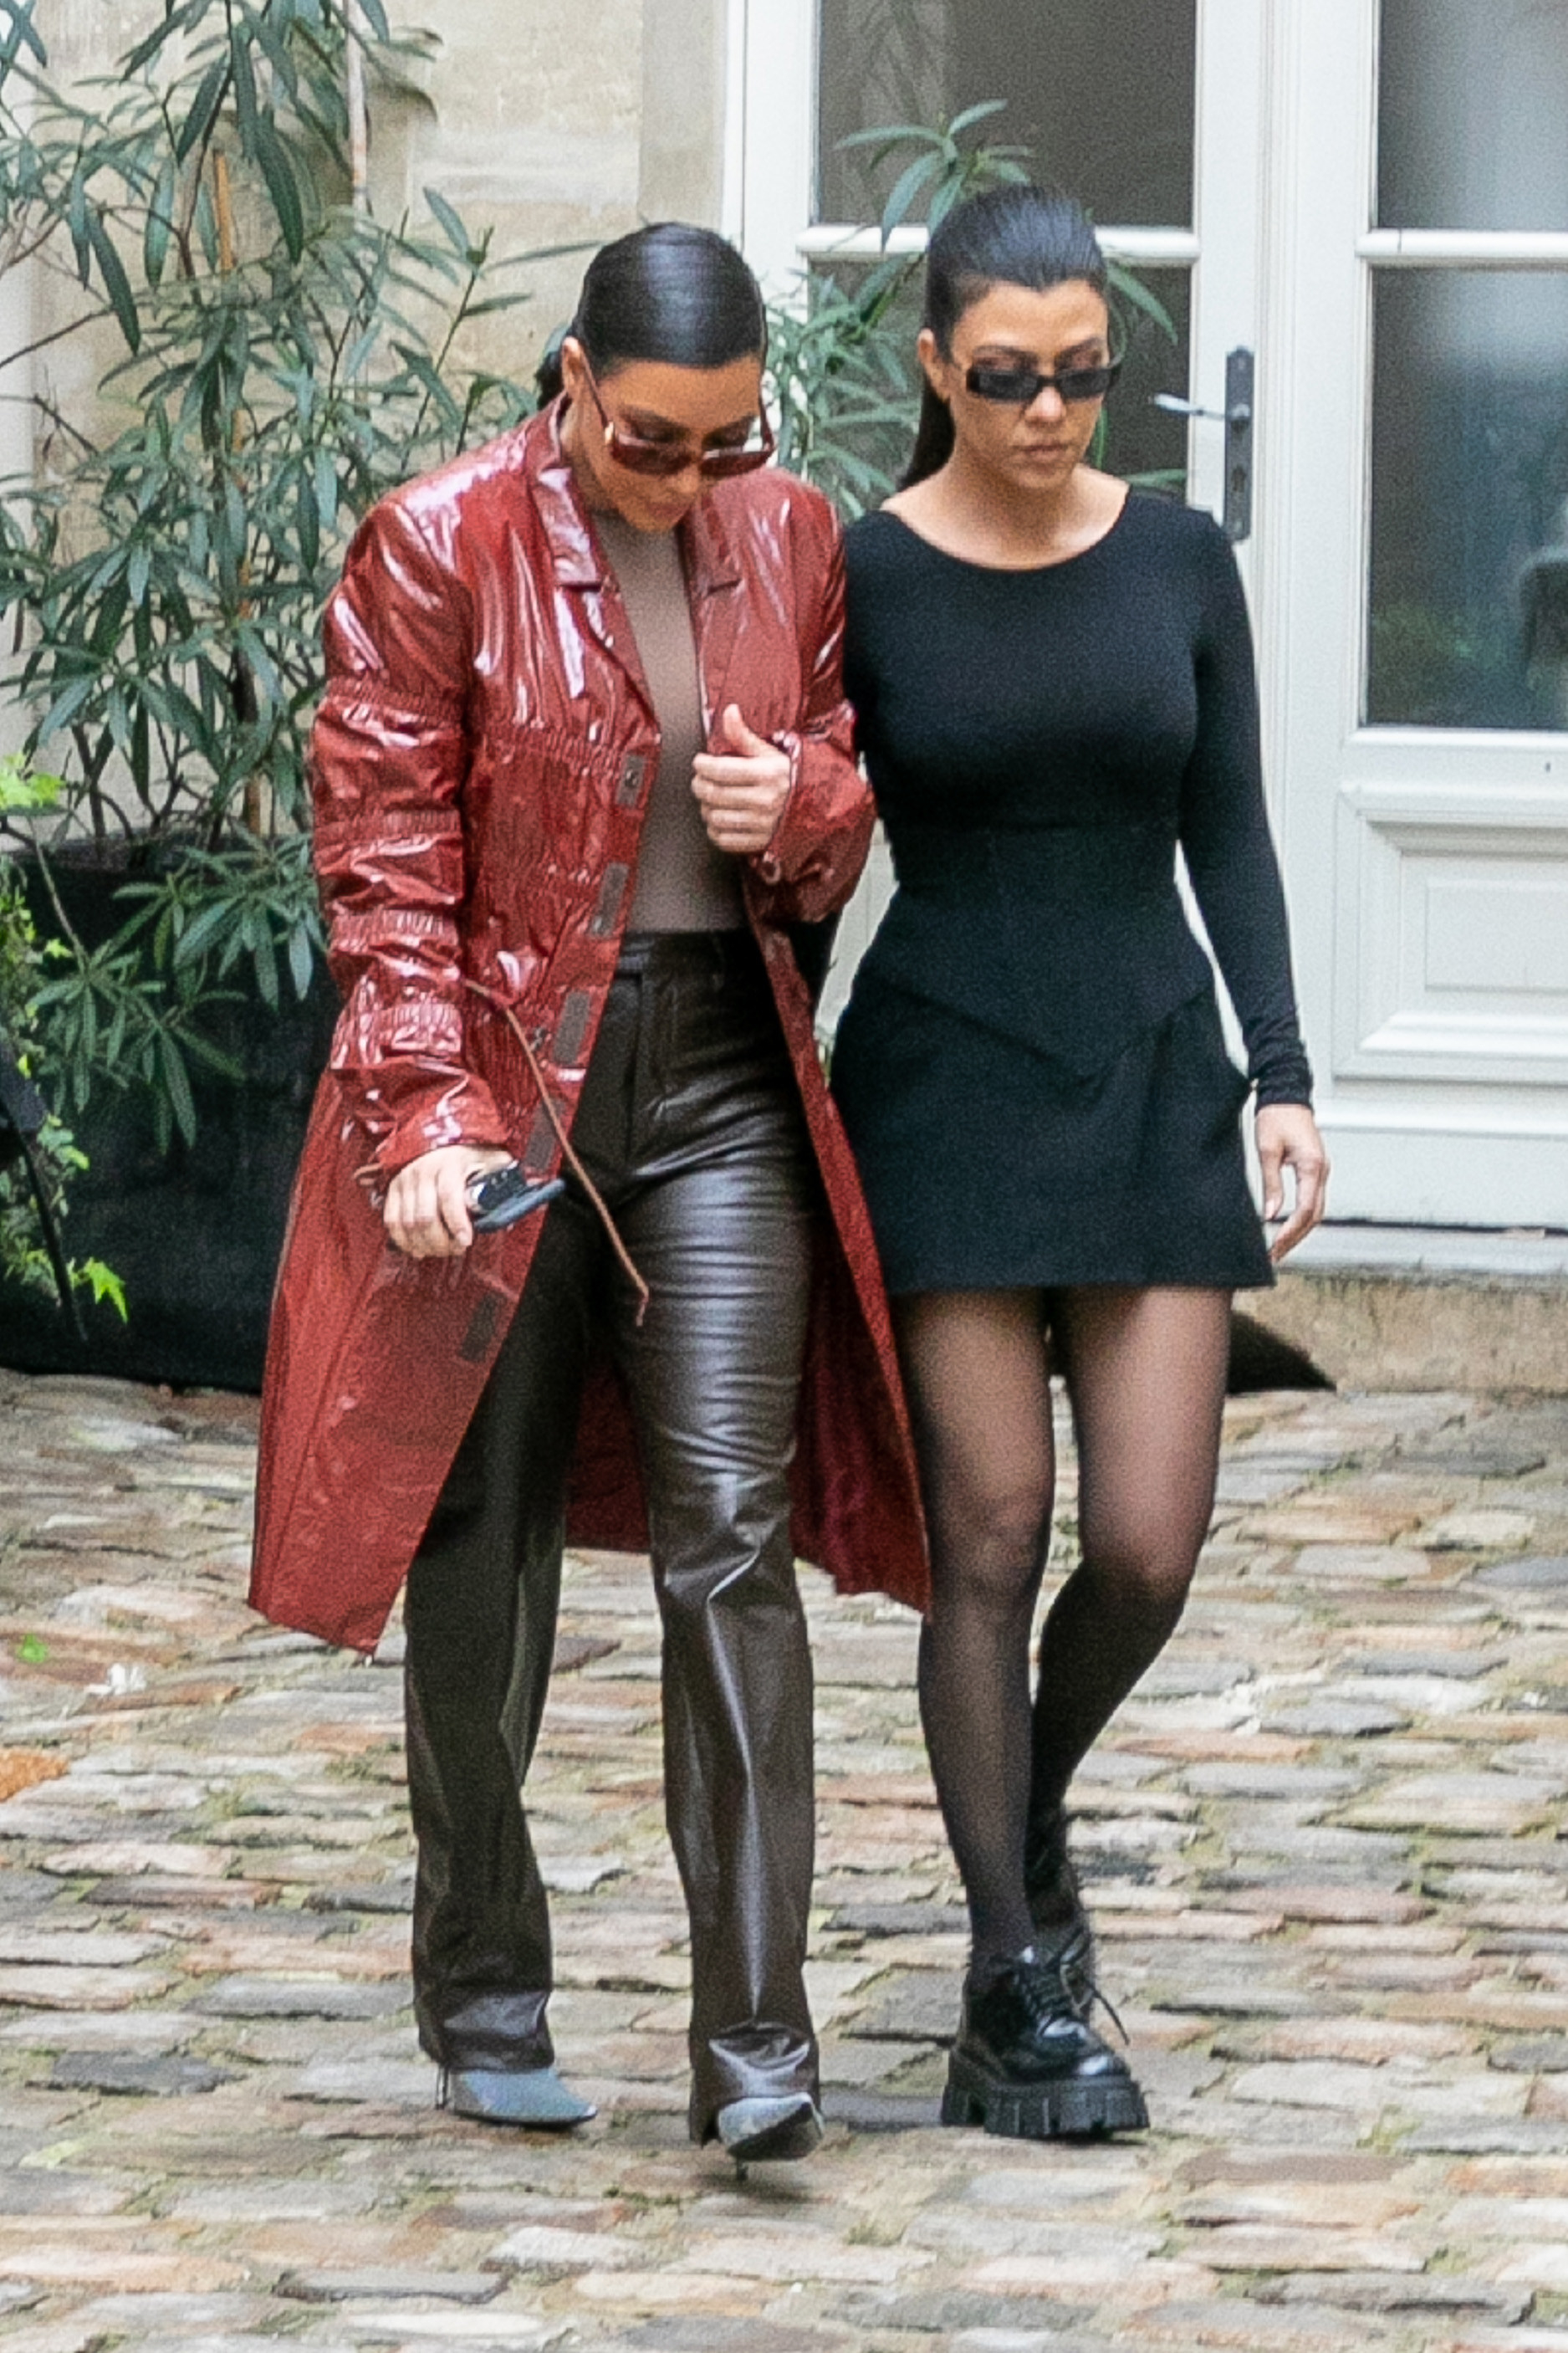 Kim and Kourtney walking together